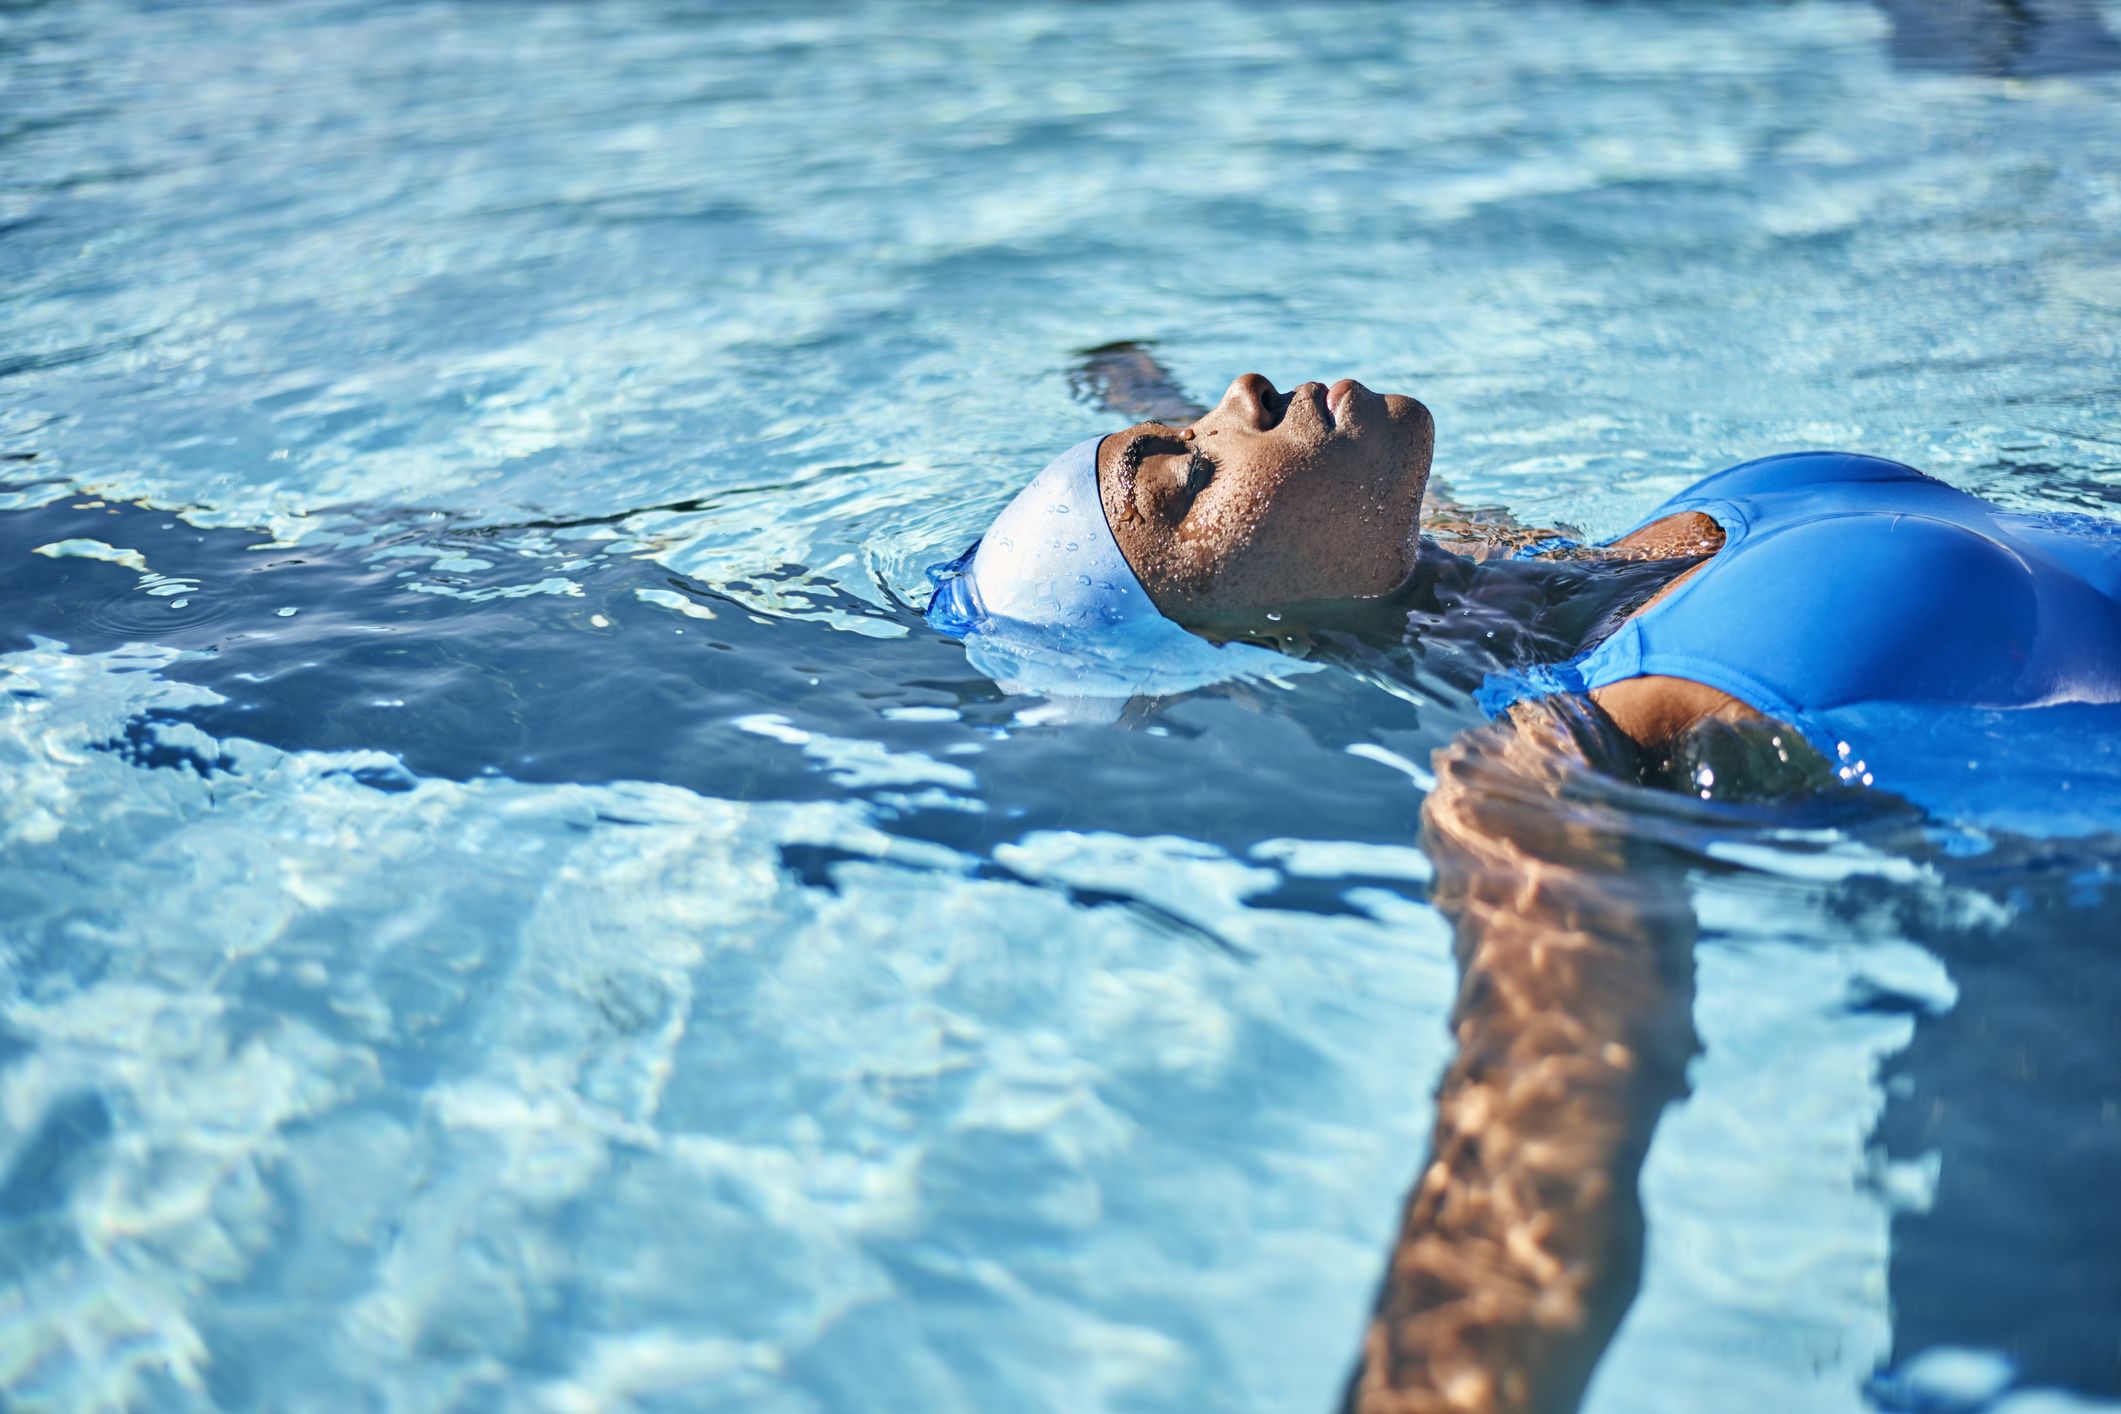 Women in Berlin can now swim topless as part of new rule change